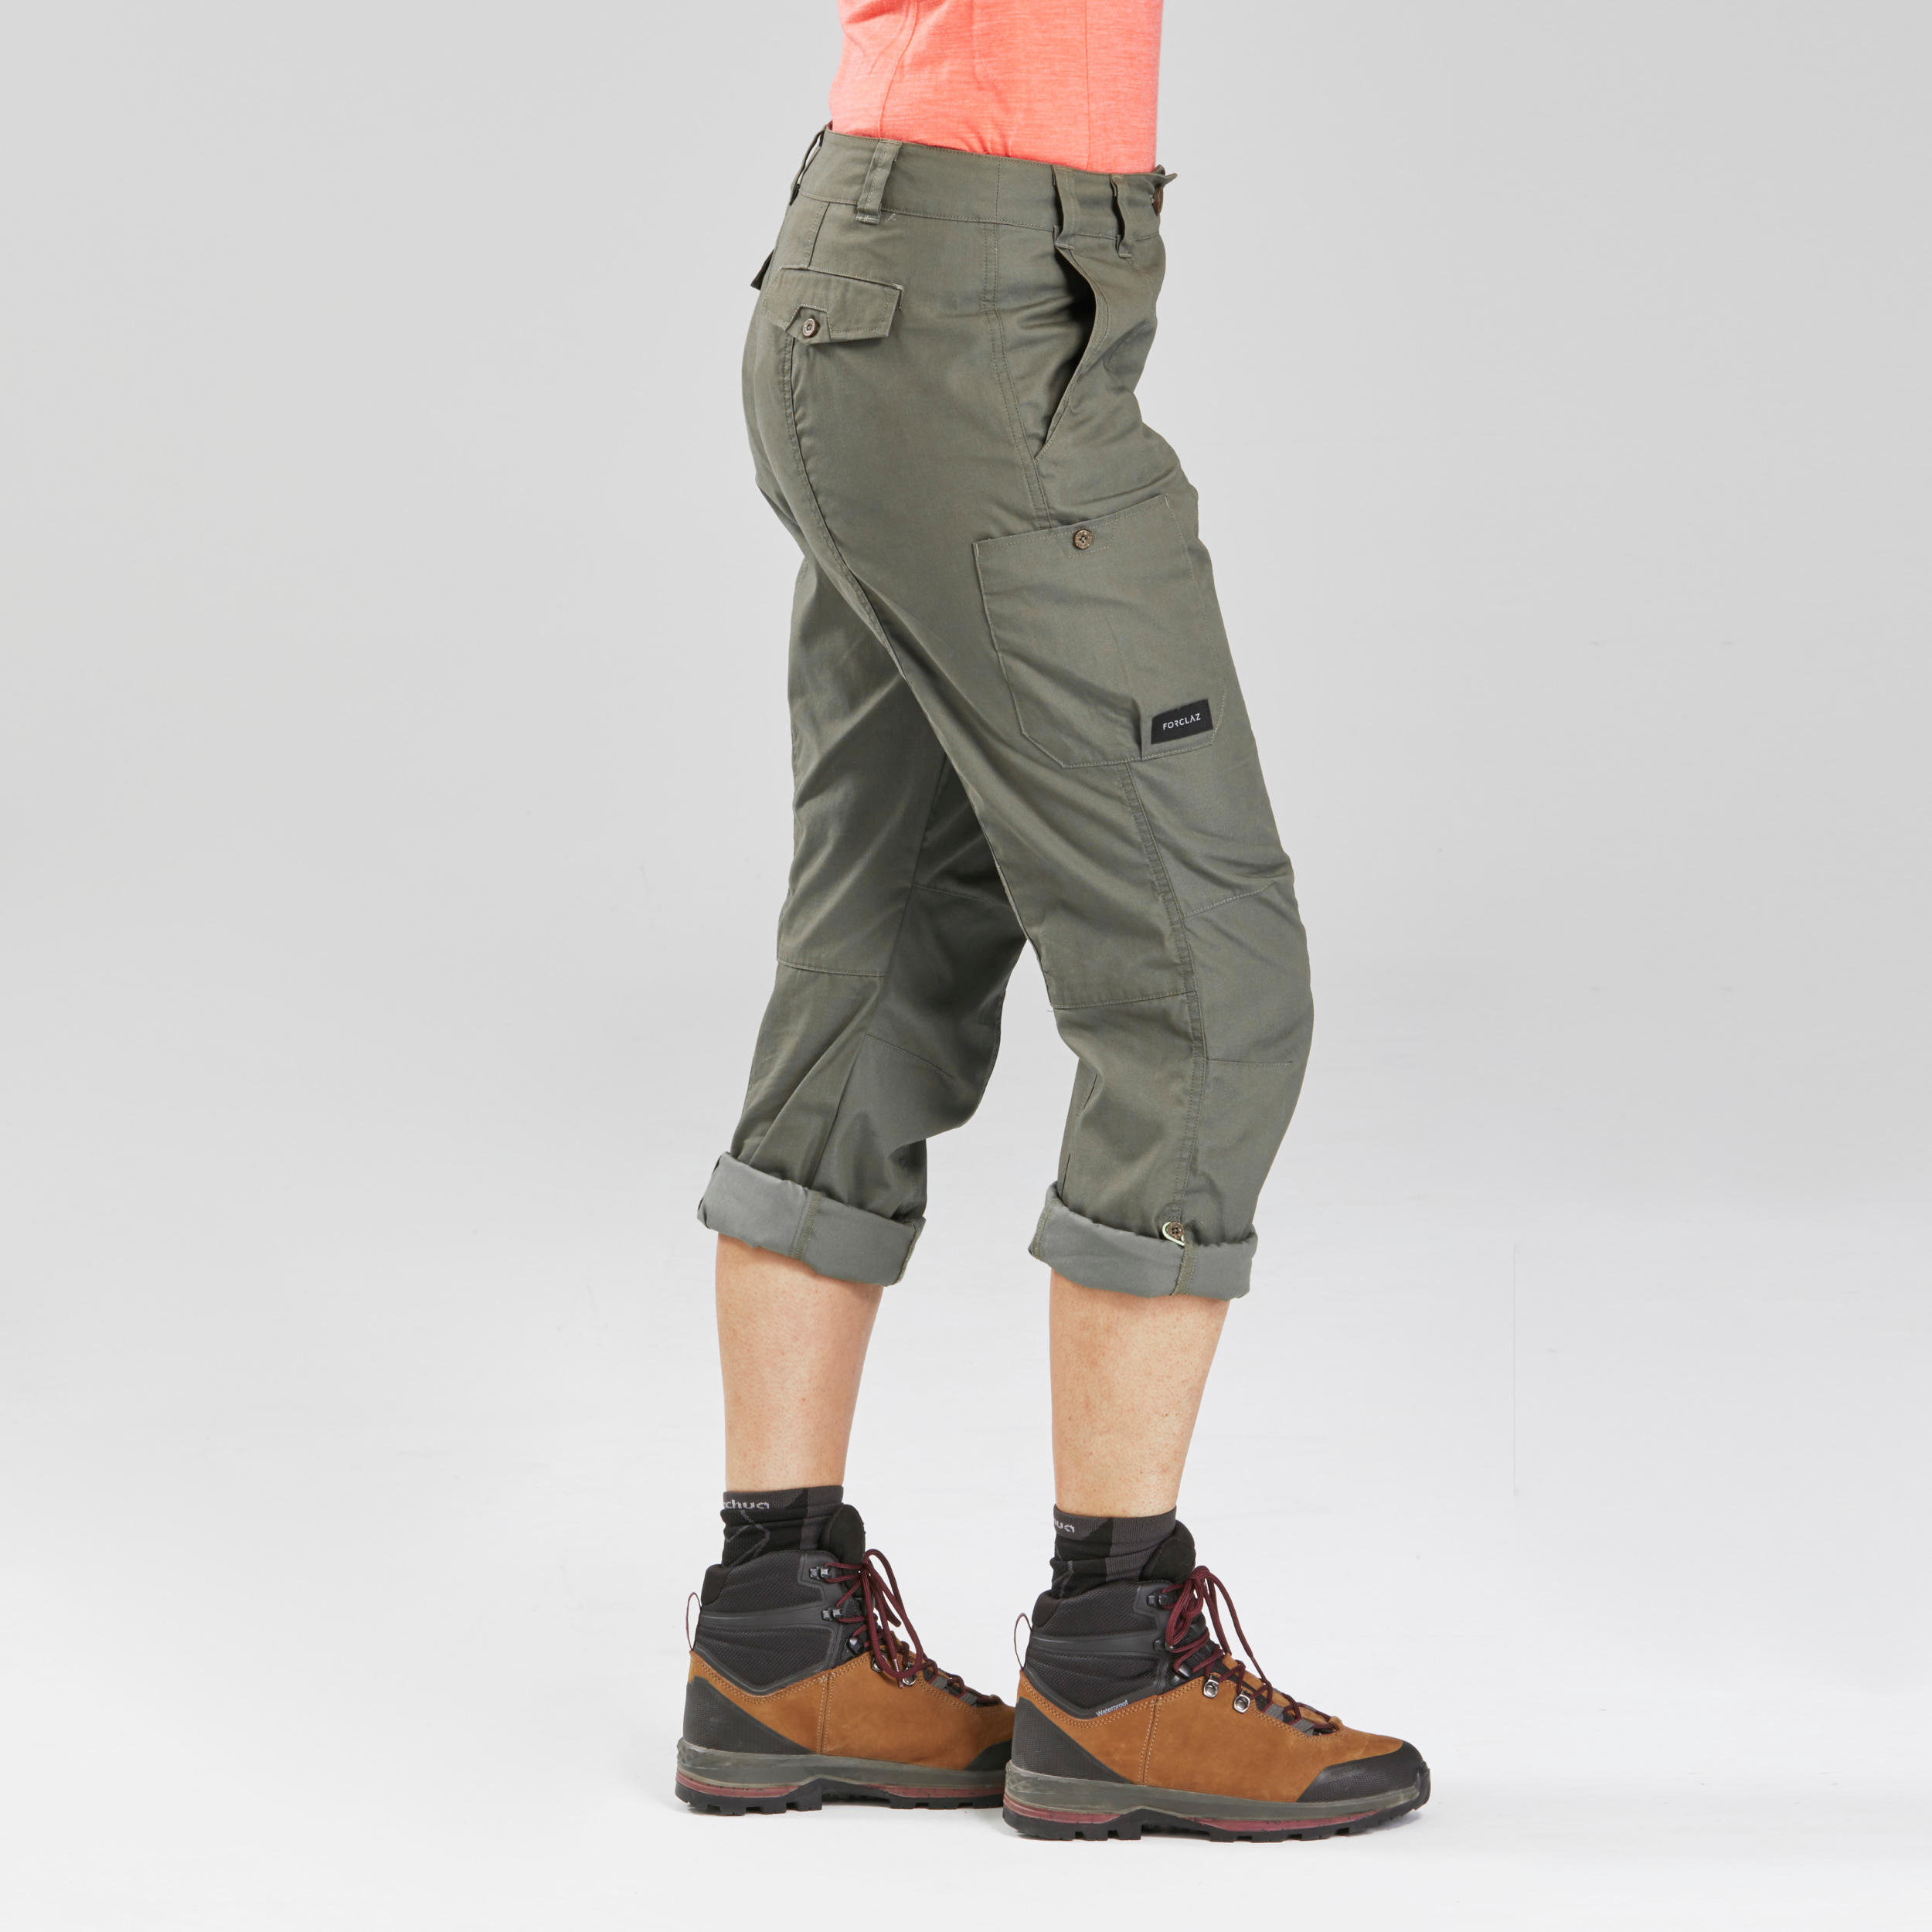 Buy Women's Khaki Travel Trekking Trousers Online